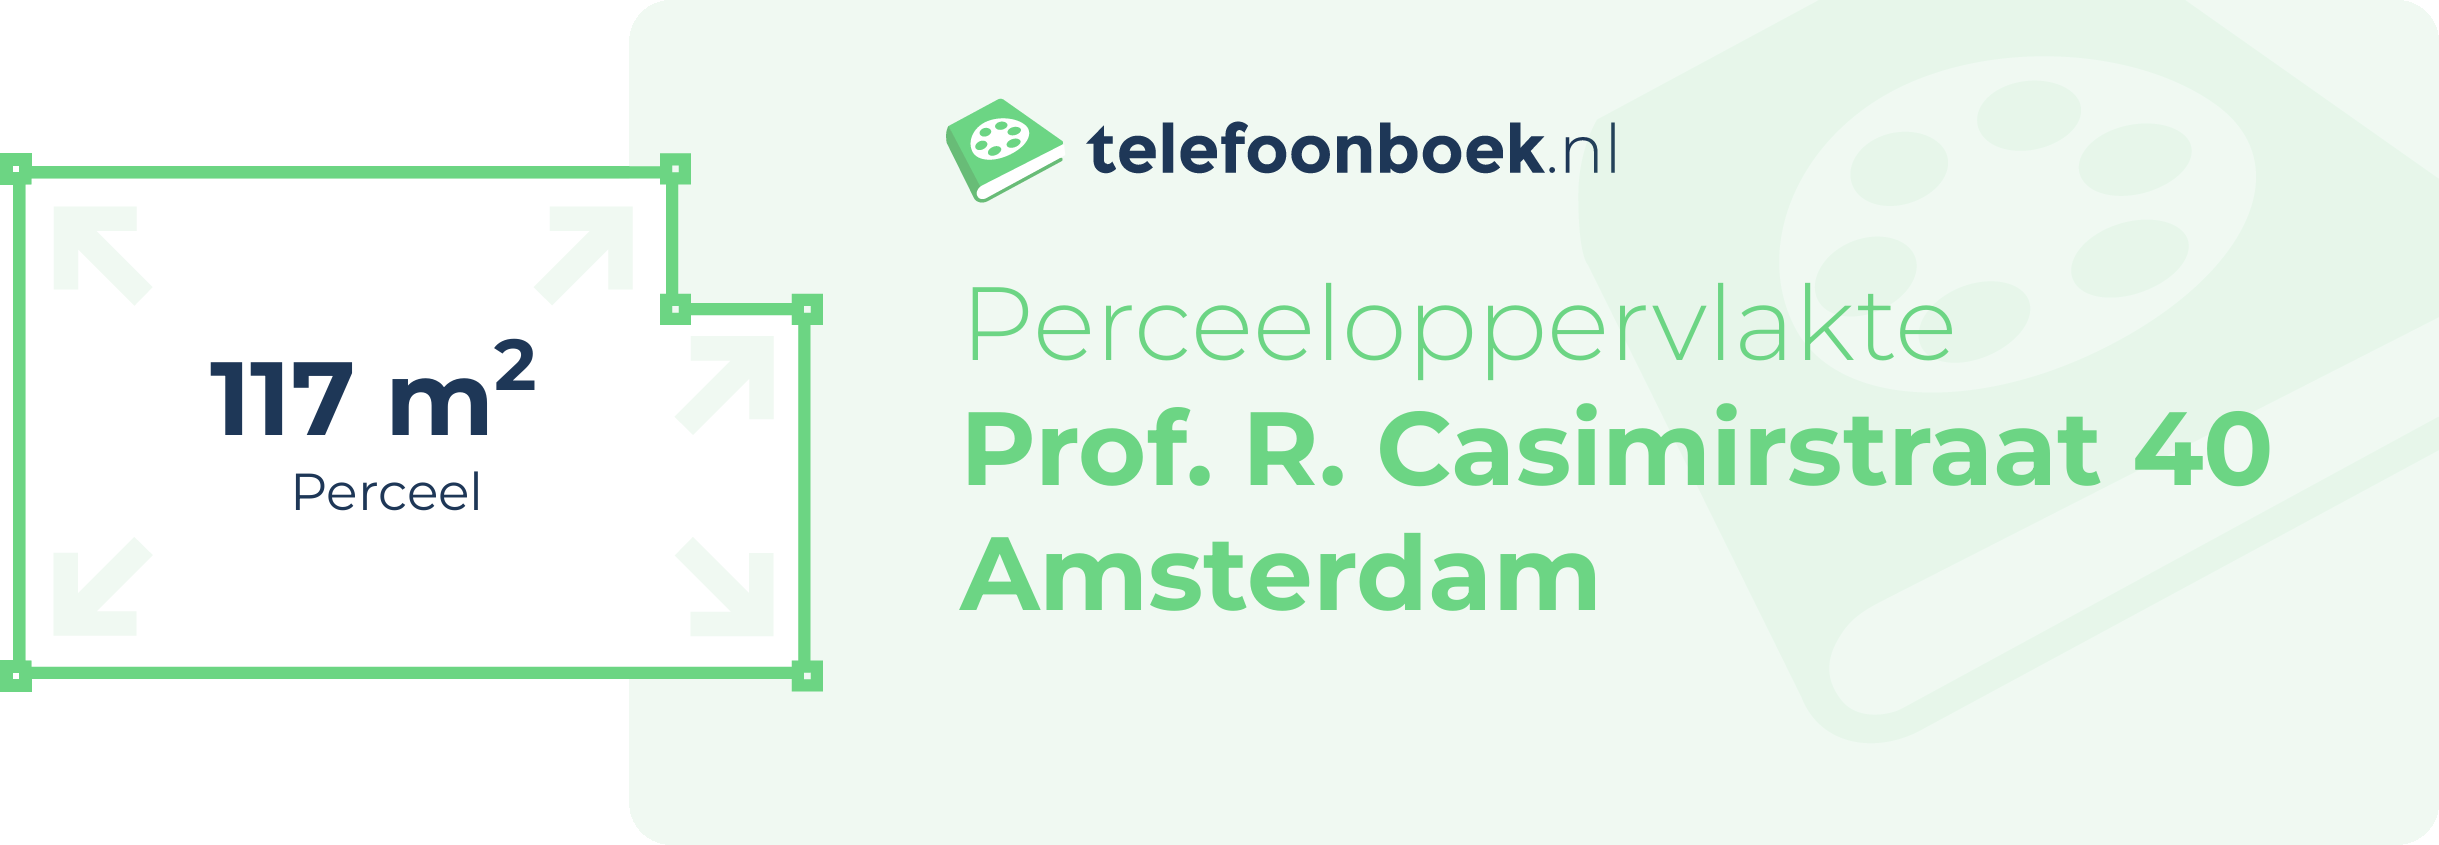 Perceeloppervlakte Prof. R. Casimirstraat 40 Amsterdam